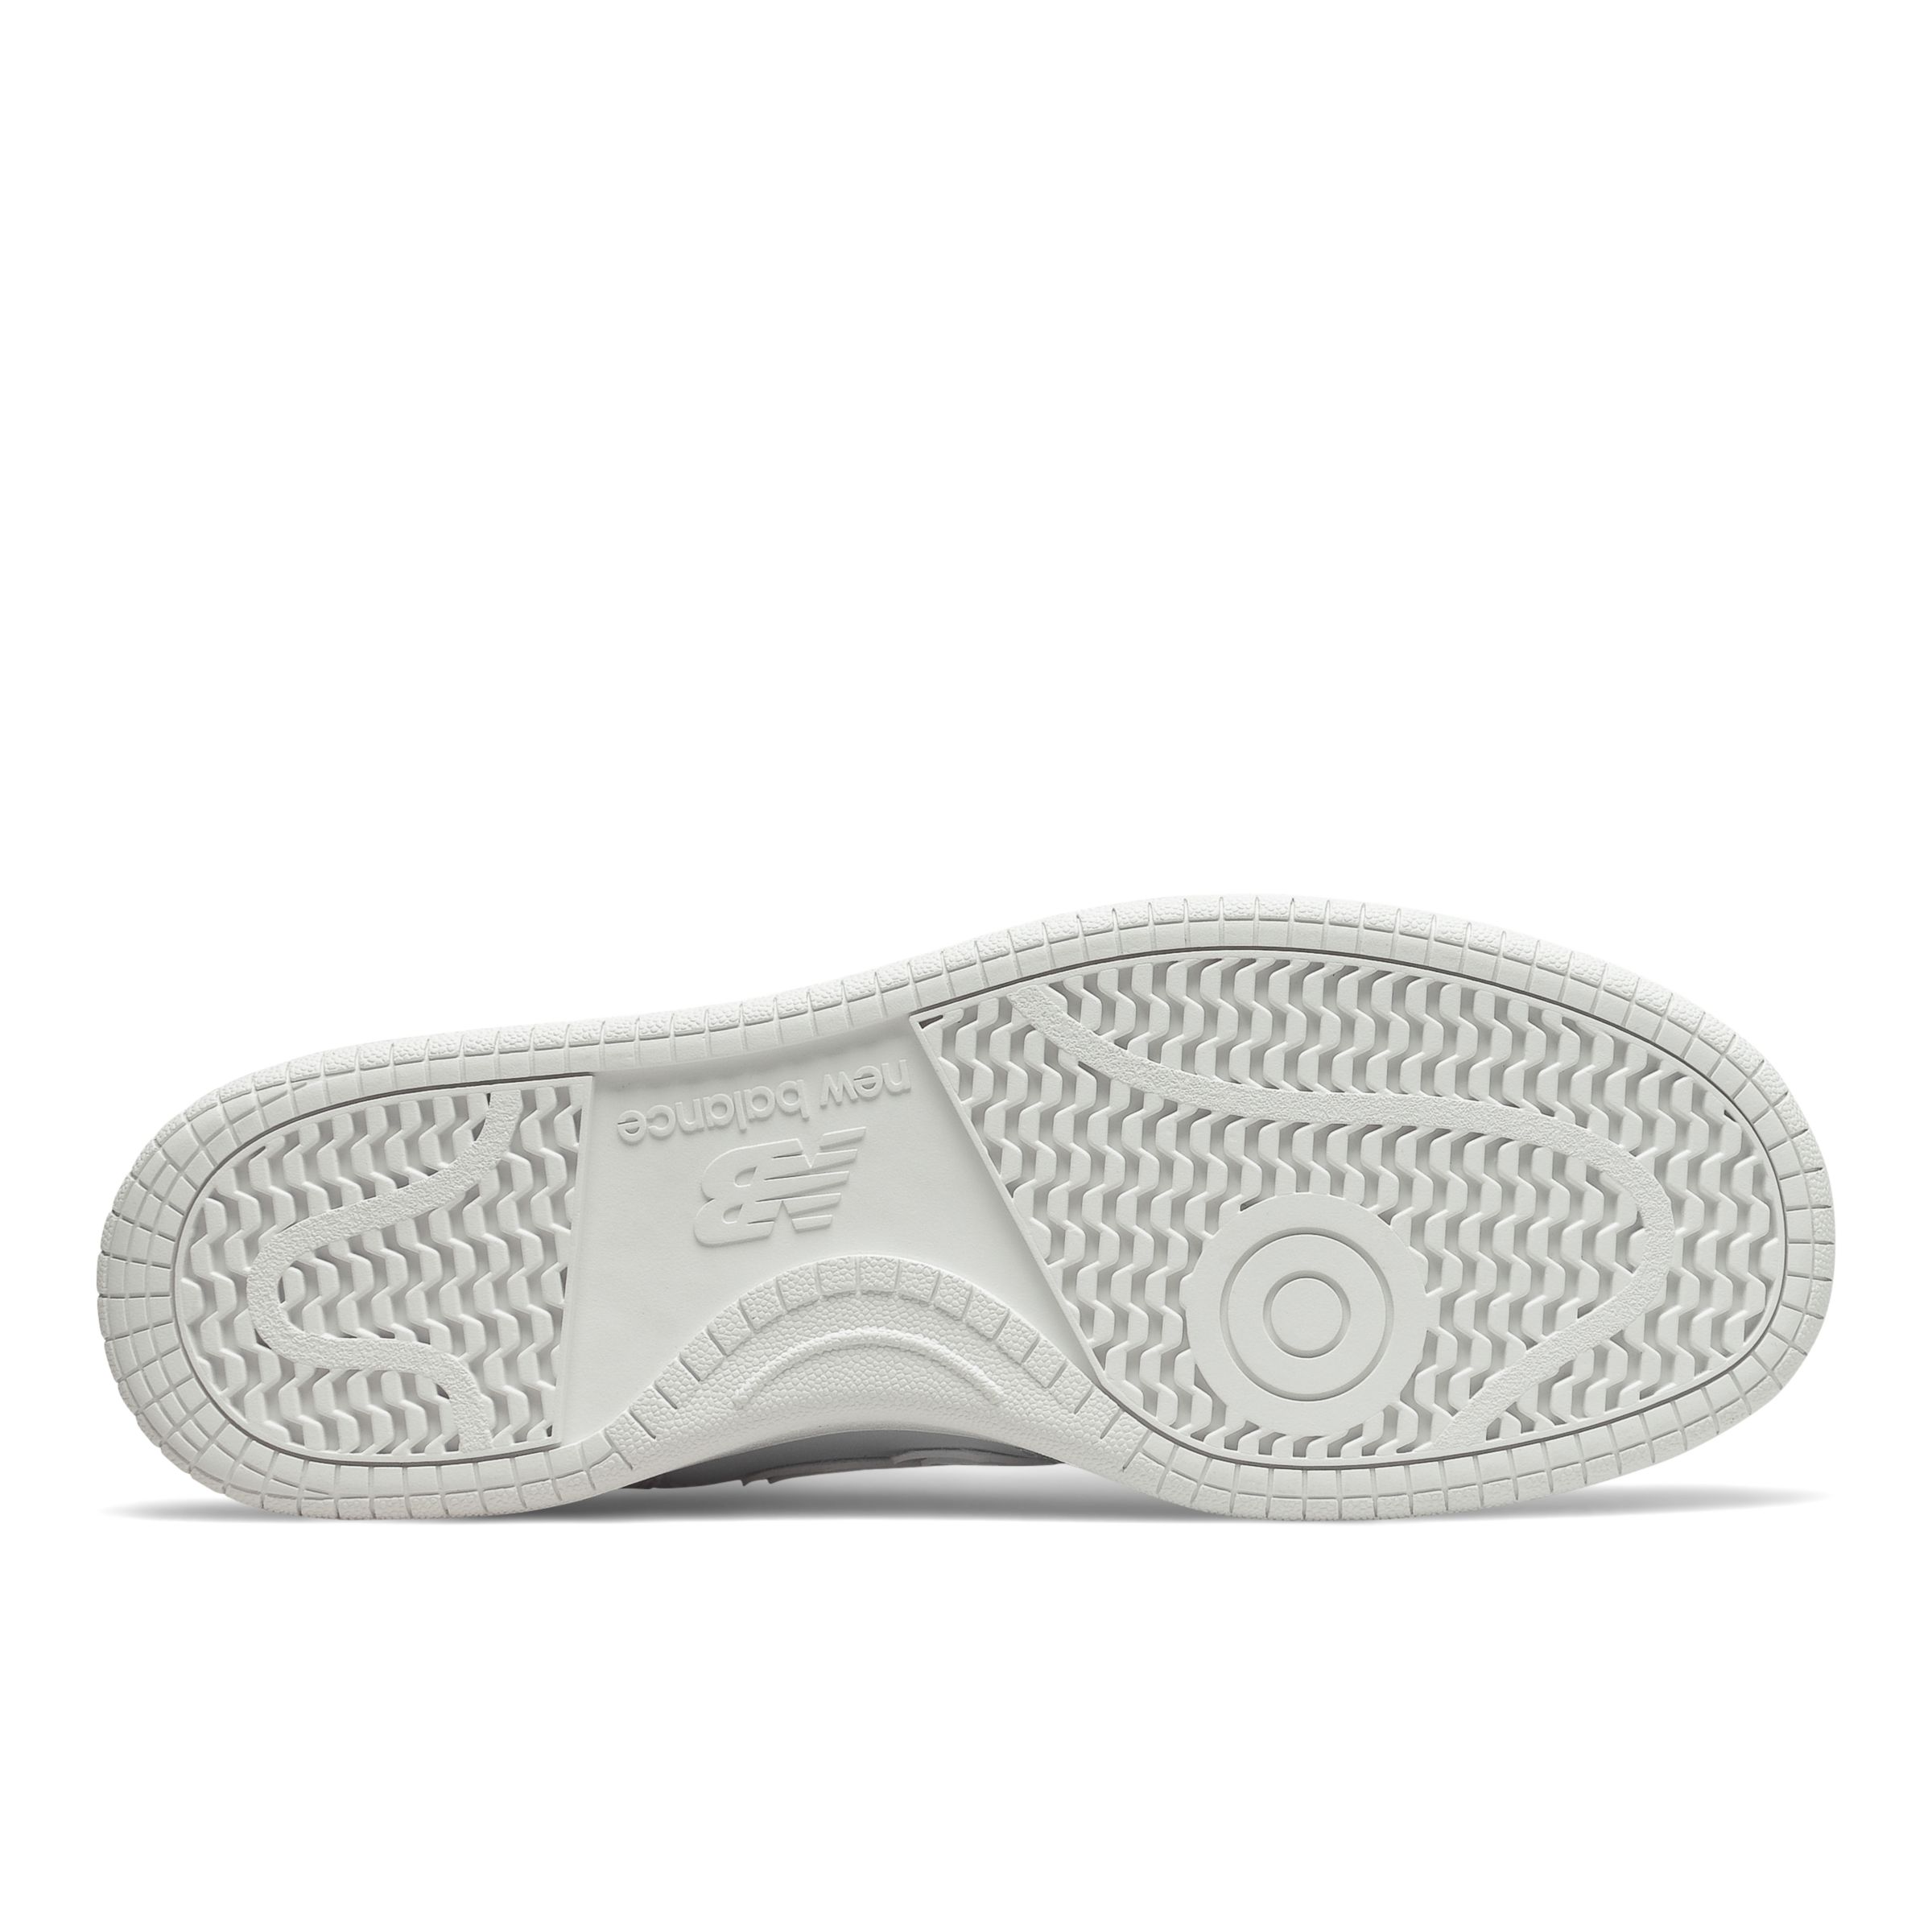 New Balance BB480 Men's Running Sport Lifestyle Shoes | eBay